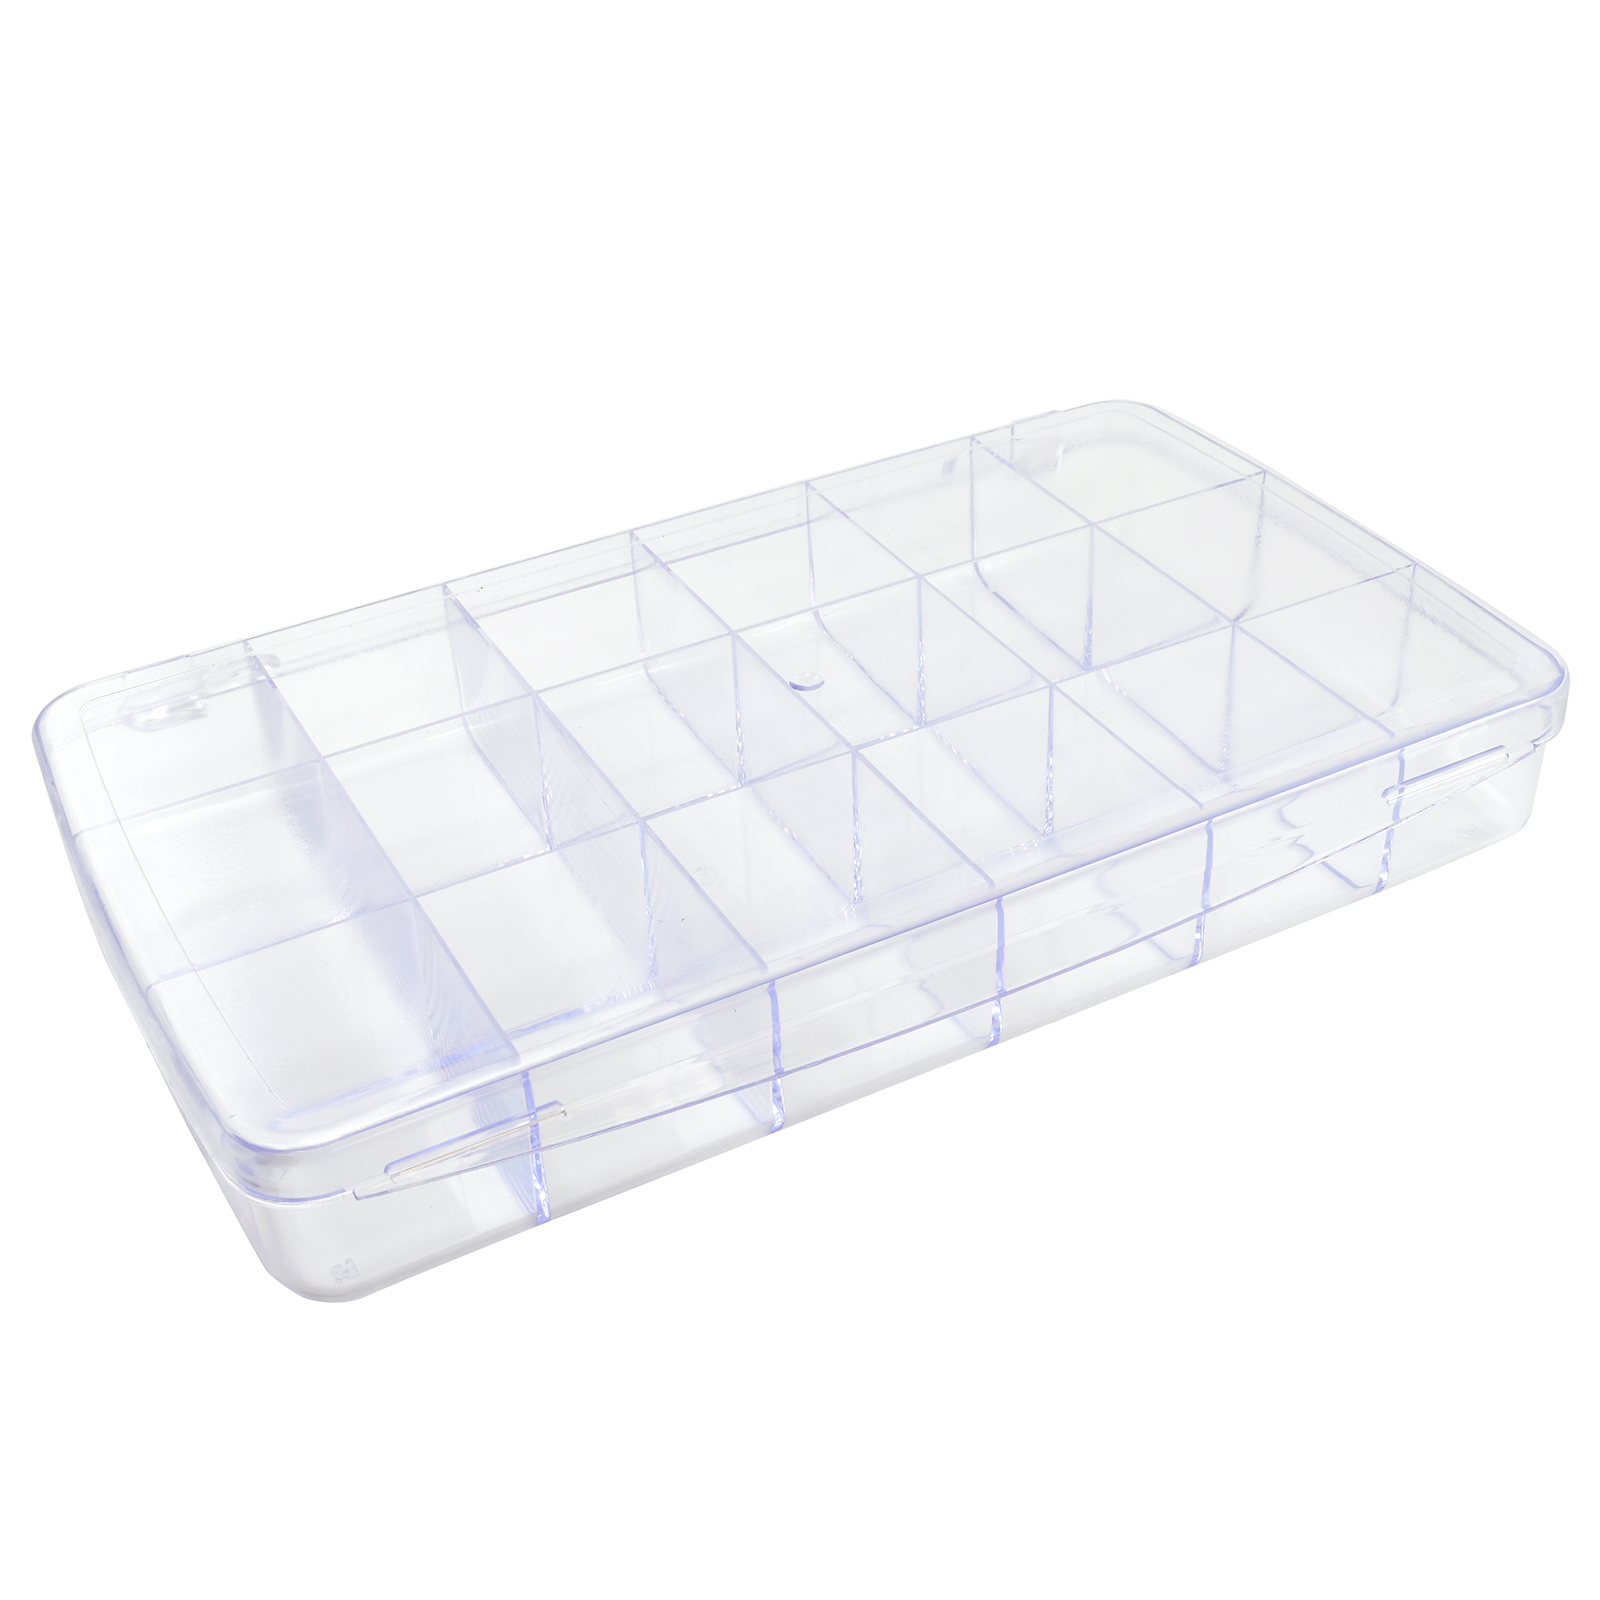 Details about   Plastic Multi-Compartment Adjustable Organizer Storage Box Case Container Case